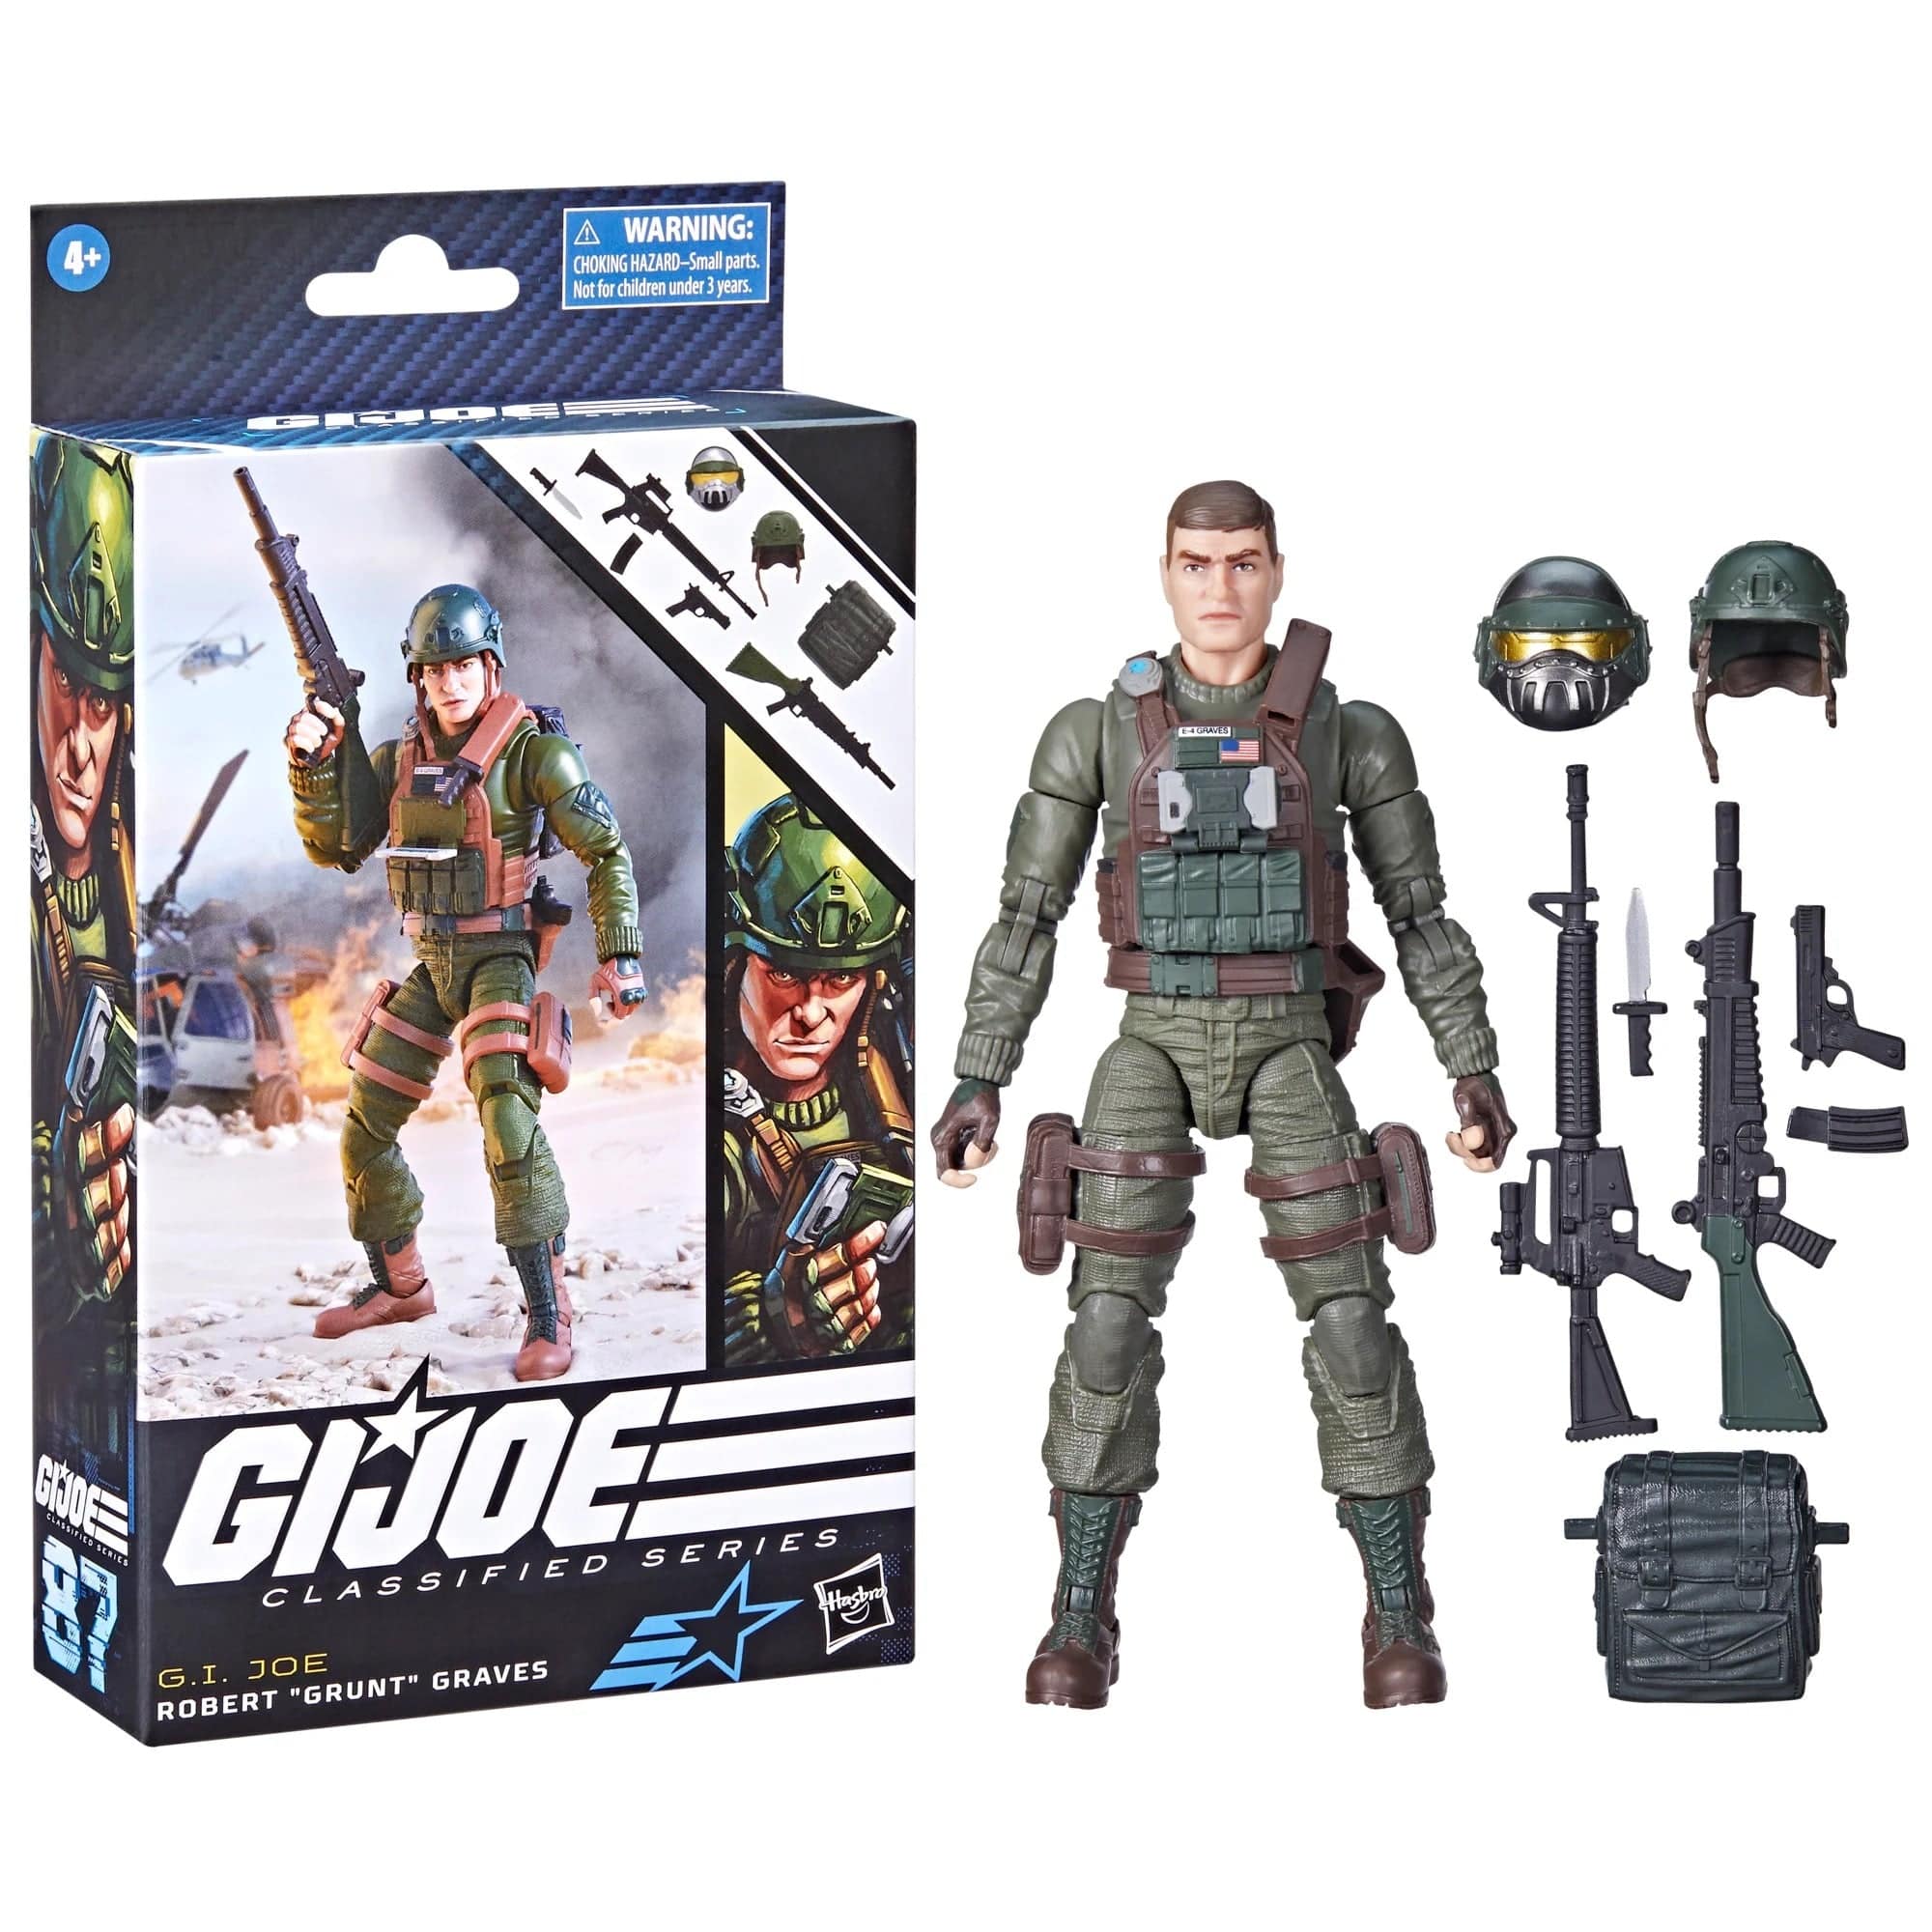 Hasbro G.I. Joe Classified Series Robert "Grunt" Graves Action Figure